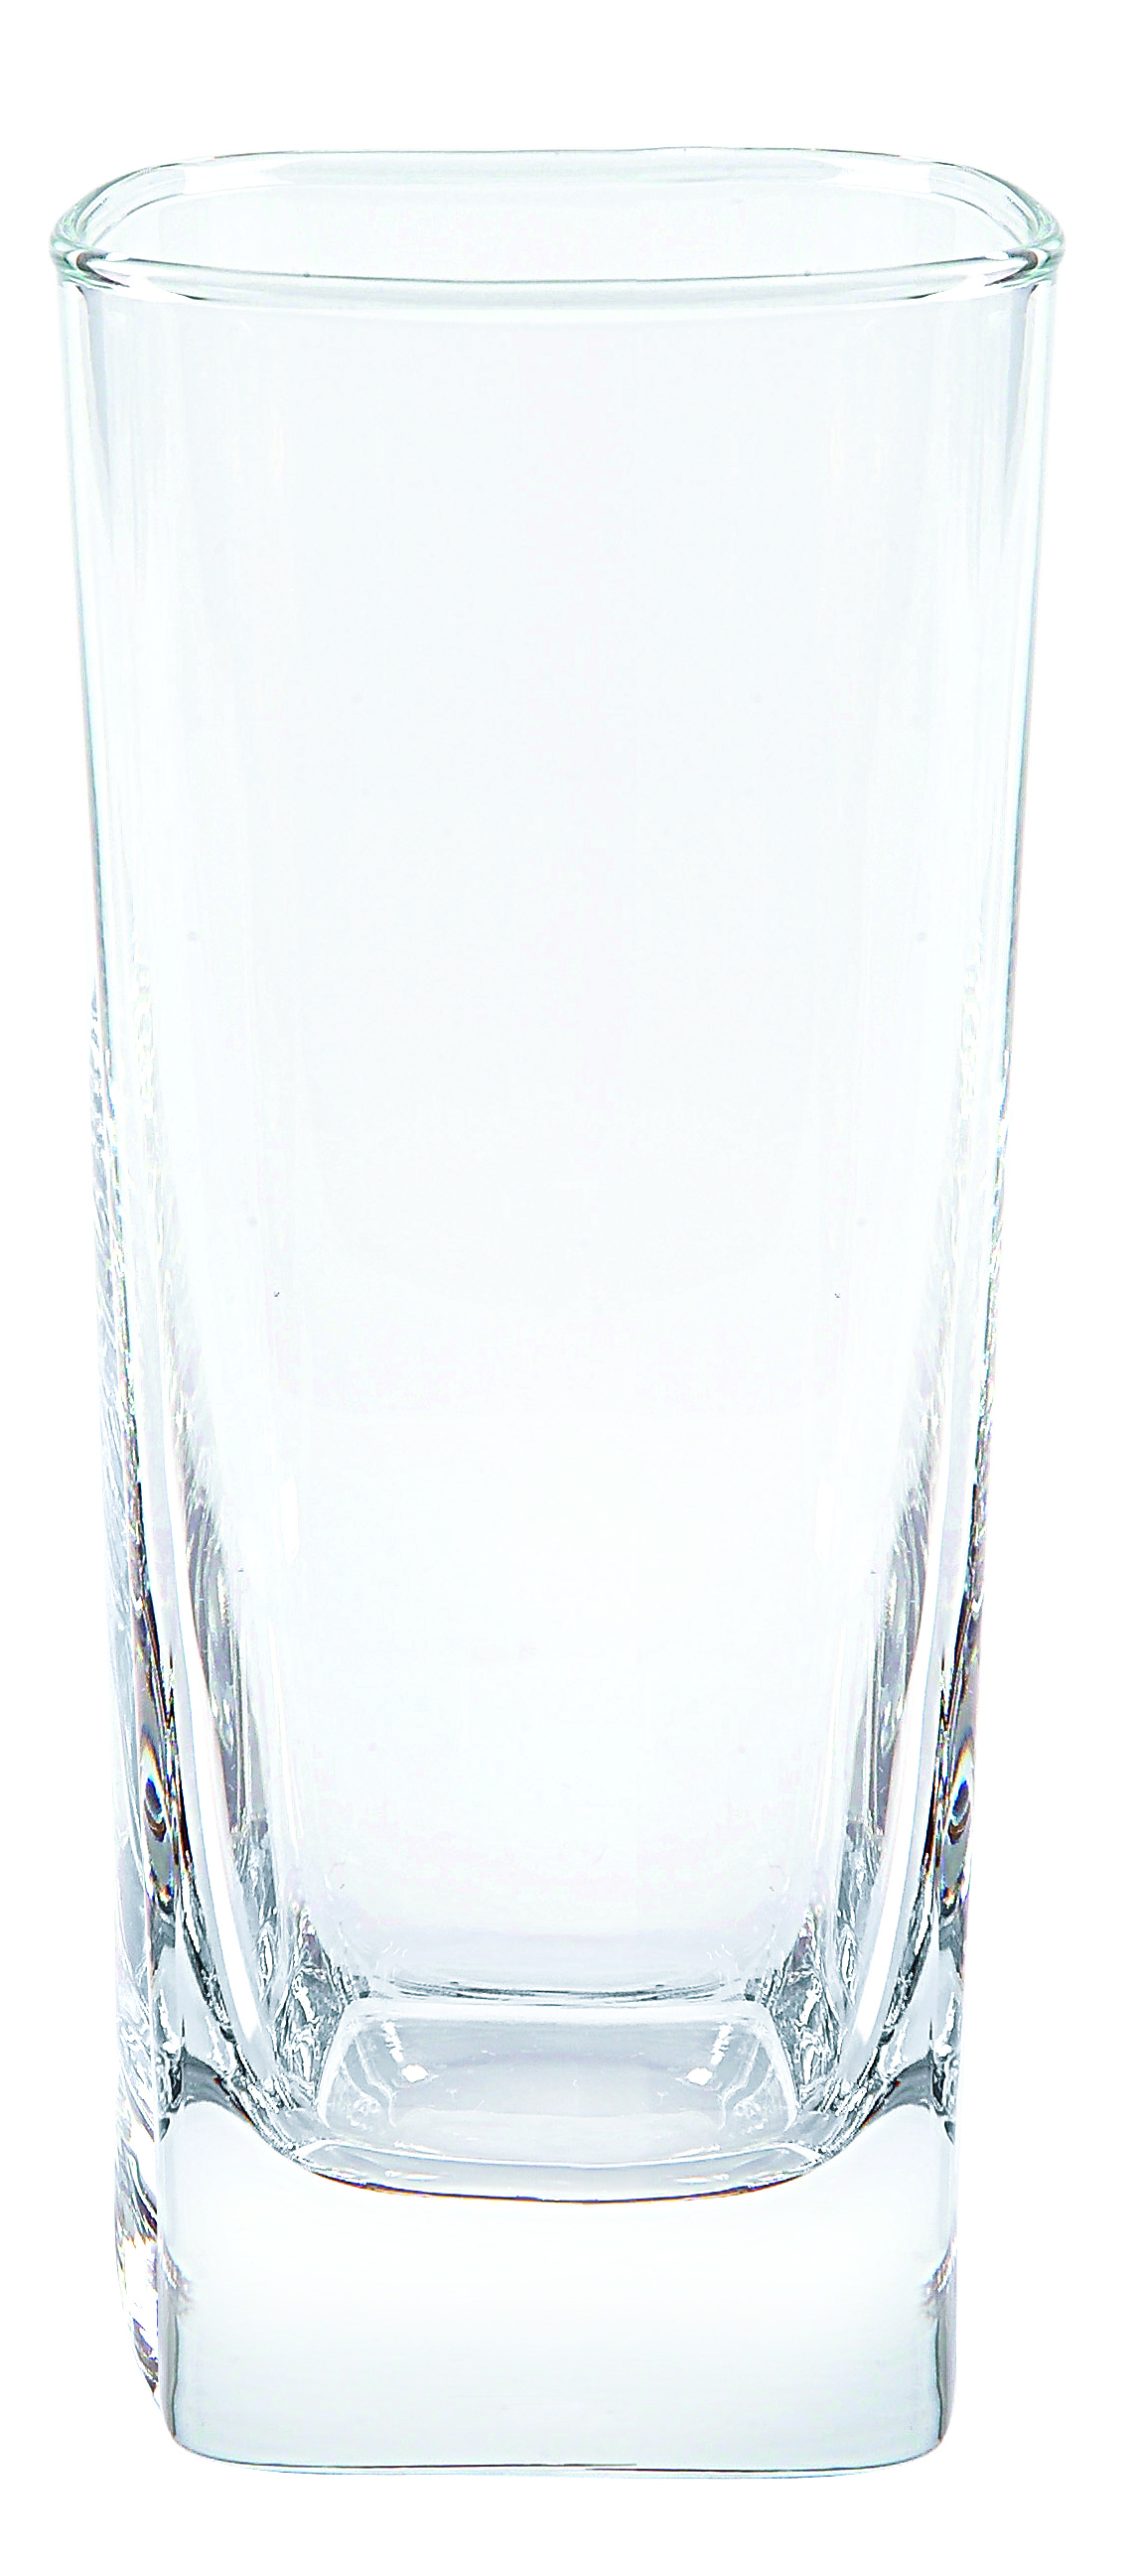 397 SHUBERT BEVERAGE GLASS 325ml CRISTAR